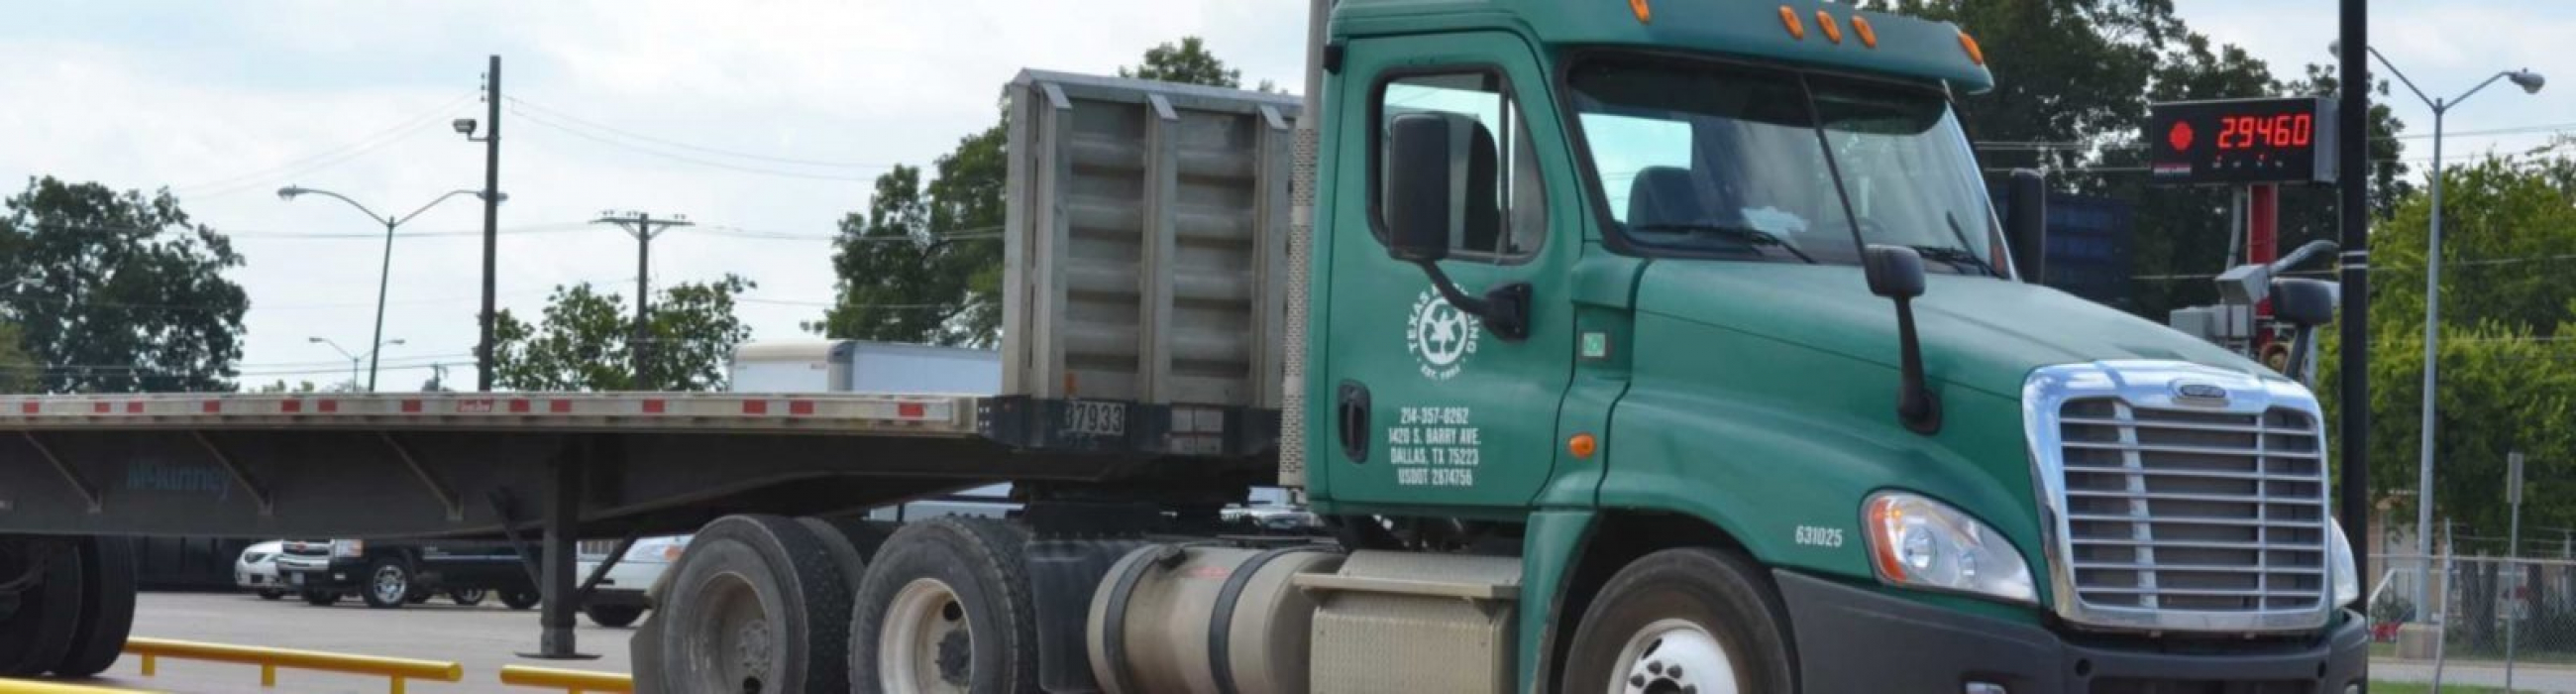 Metal-Recycling-Dallas_TxR-Slider-Truck-Scale